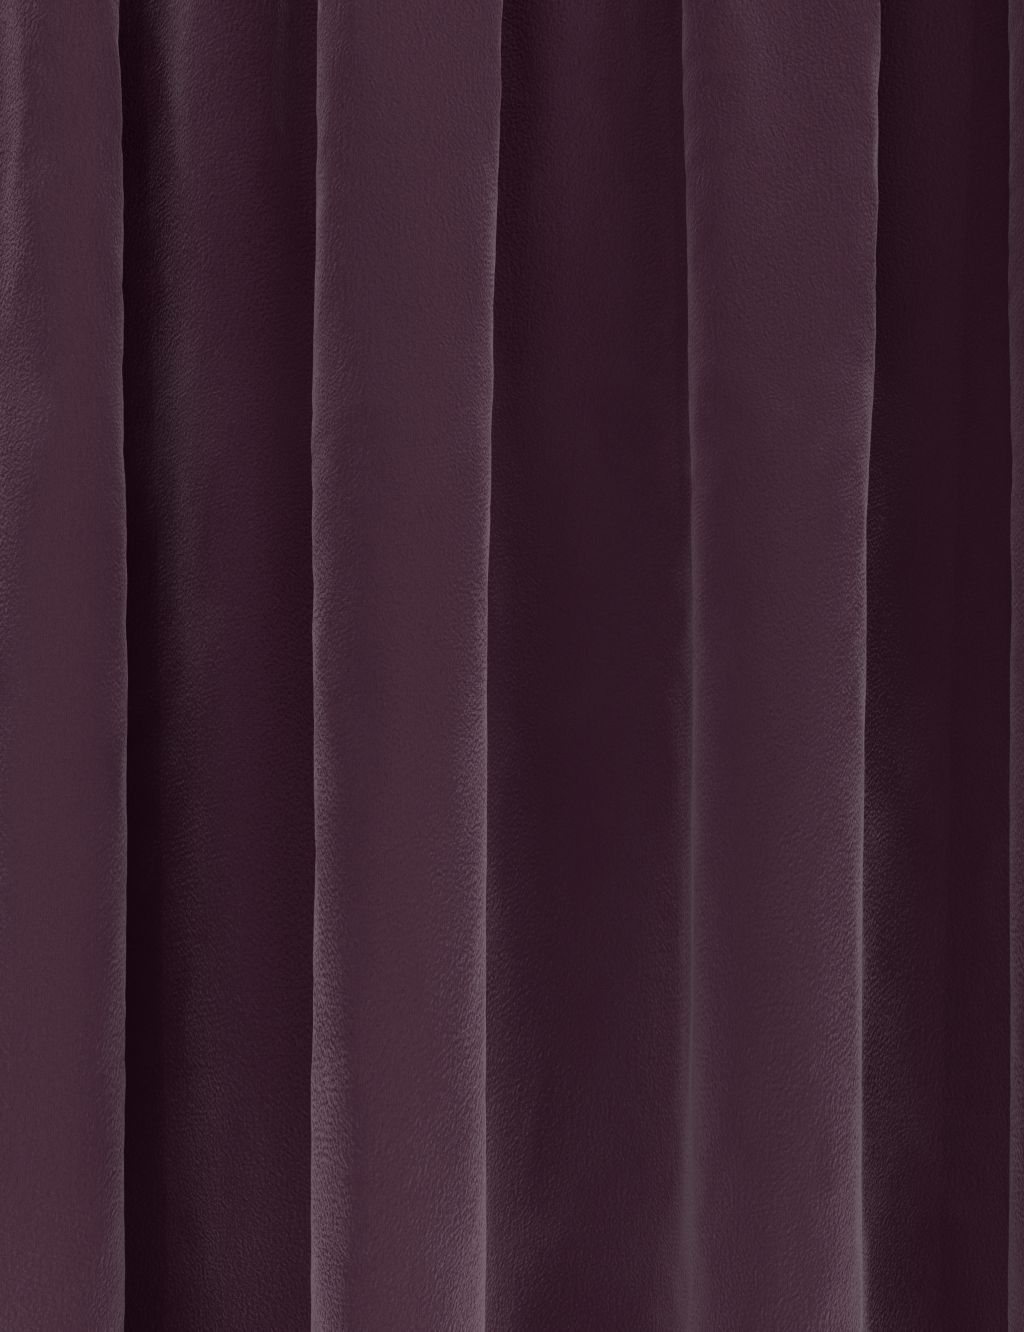 Velvet Pencil Pleat Thermal Curtains image 2